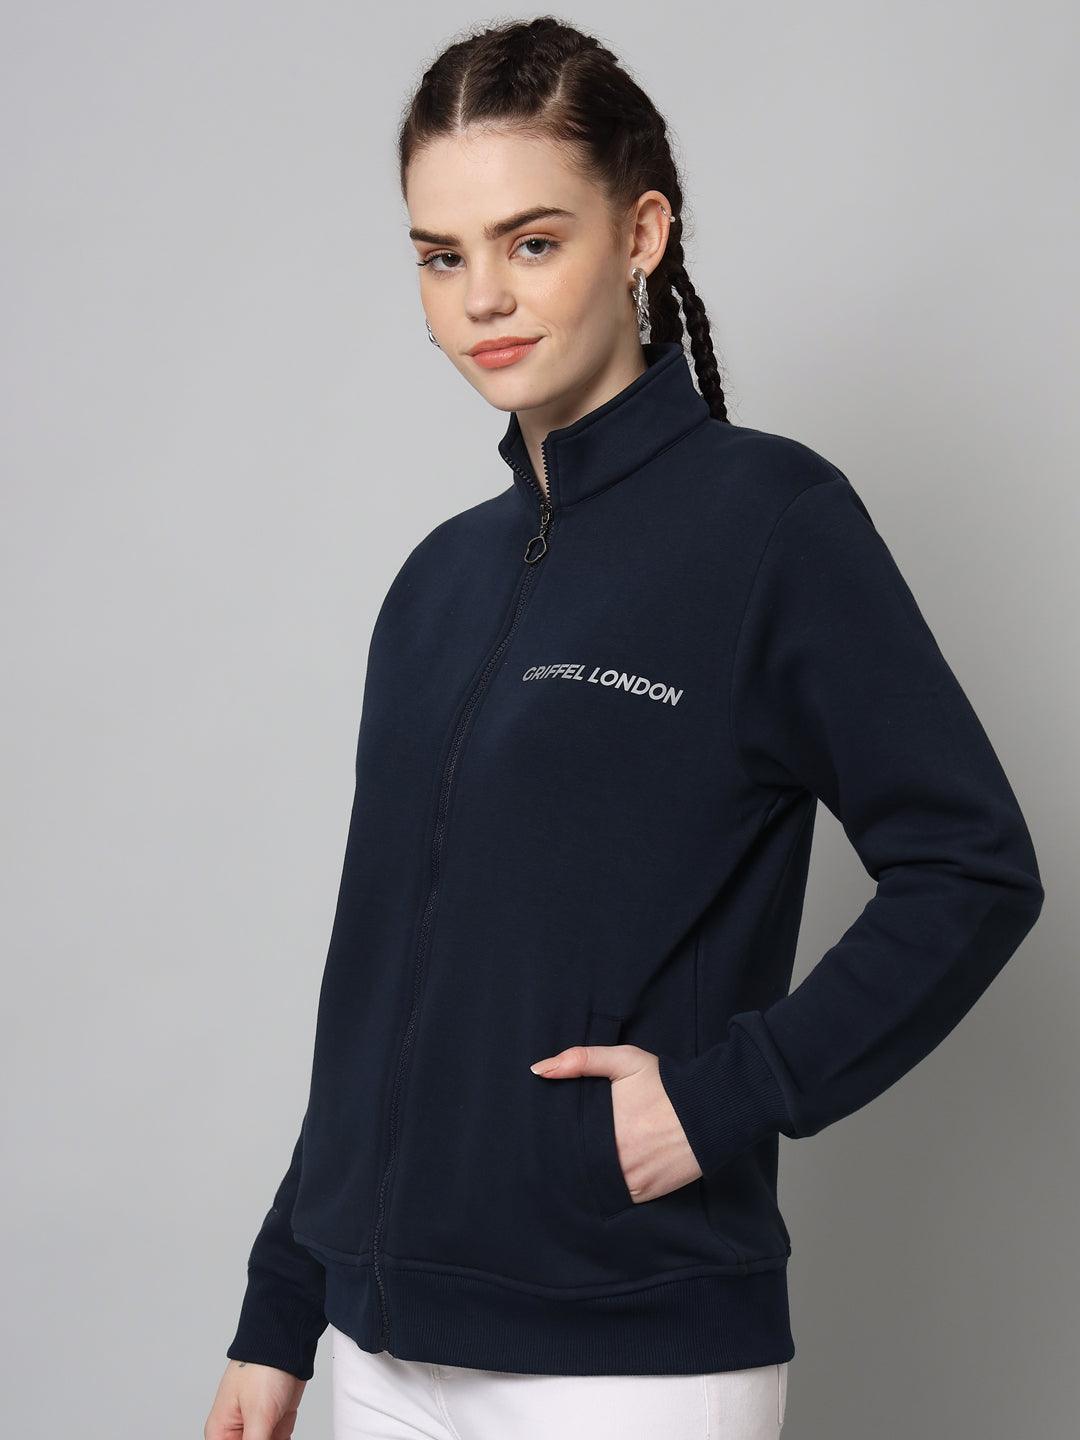 Griffel Women’s Cotton Fleece Full Sleeve Navy Zipper Sweatshirt - griffel